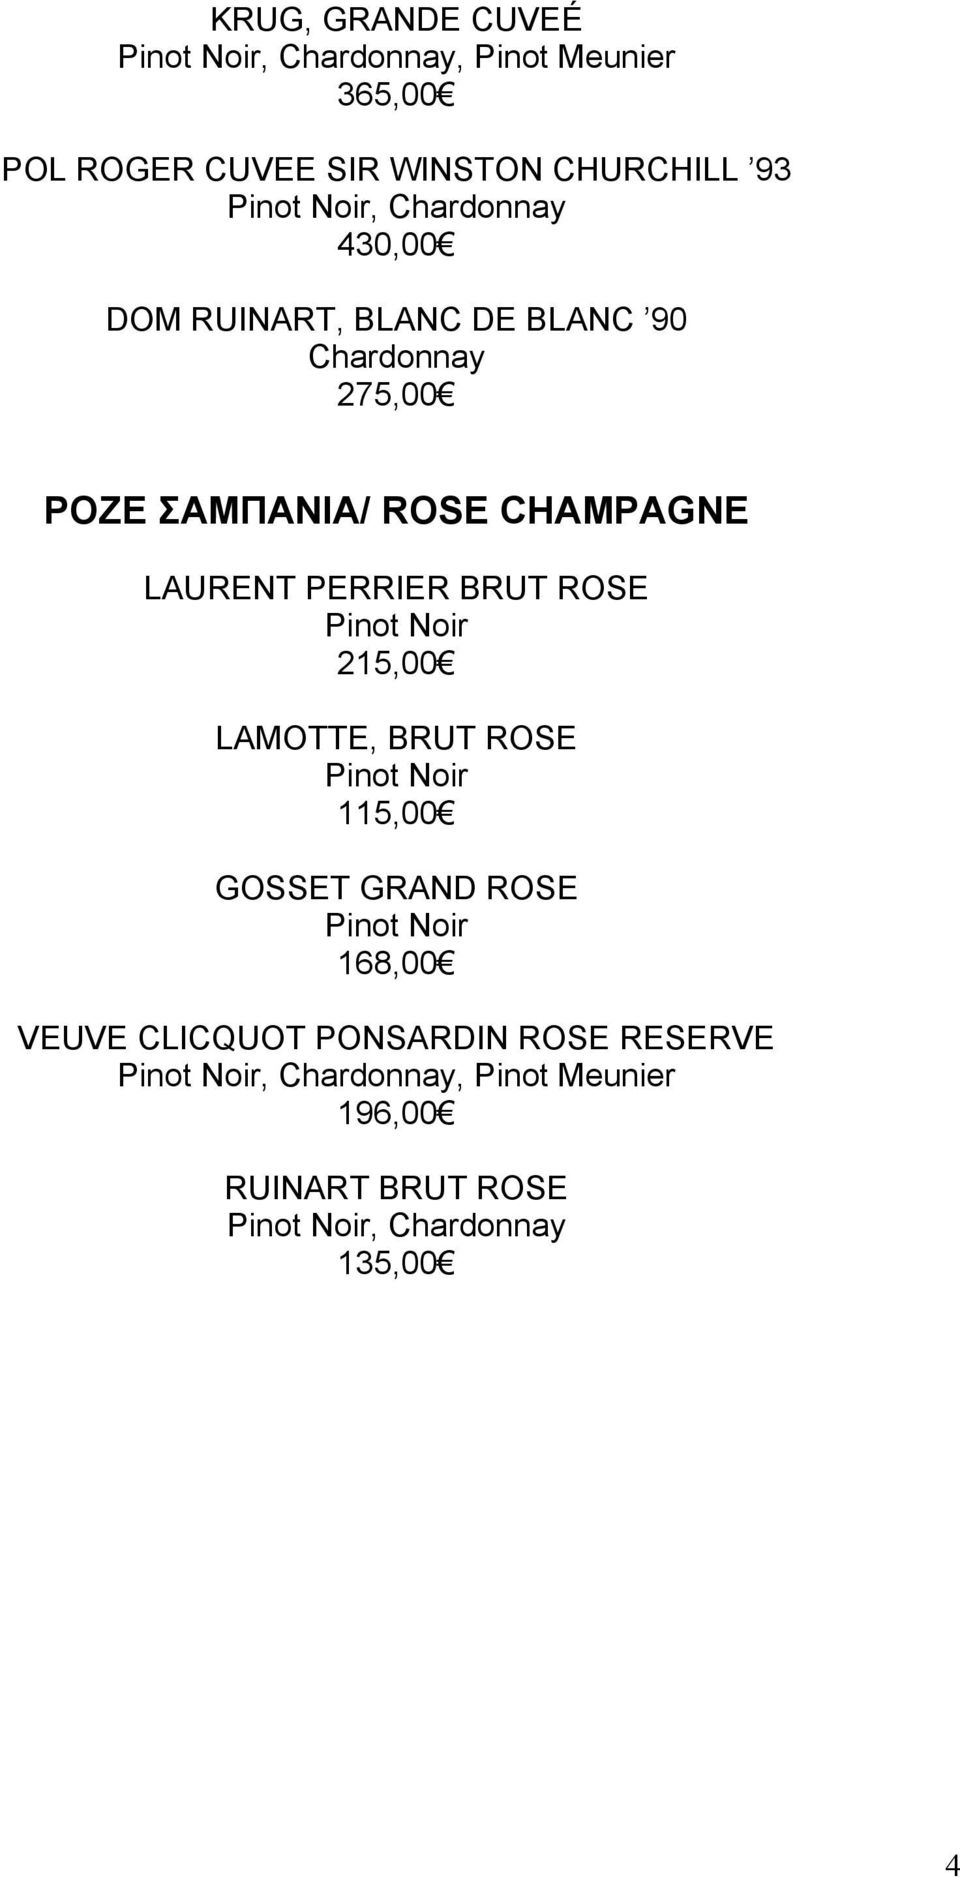 ROSE Pinot Noir 215,00 LAMOTTE, BRUT ROSE Pinot Noir 115,00 GOSSET GRAND ROSE Pinot Noir 168,00 VEUVE